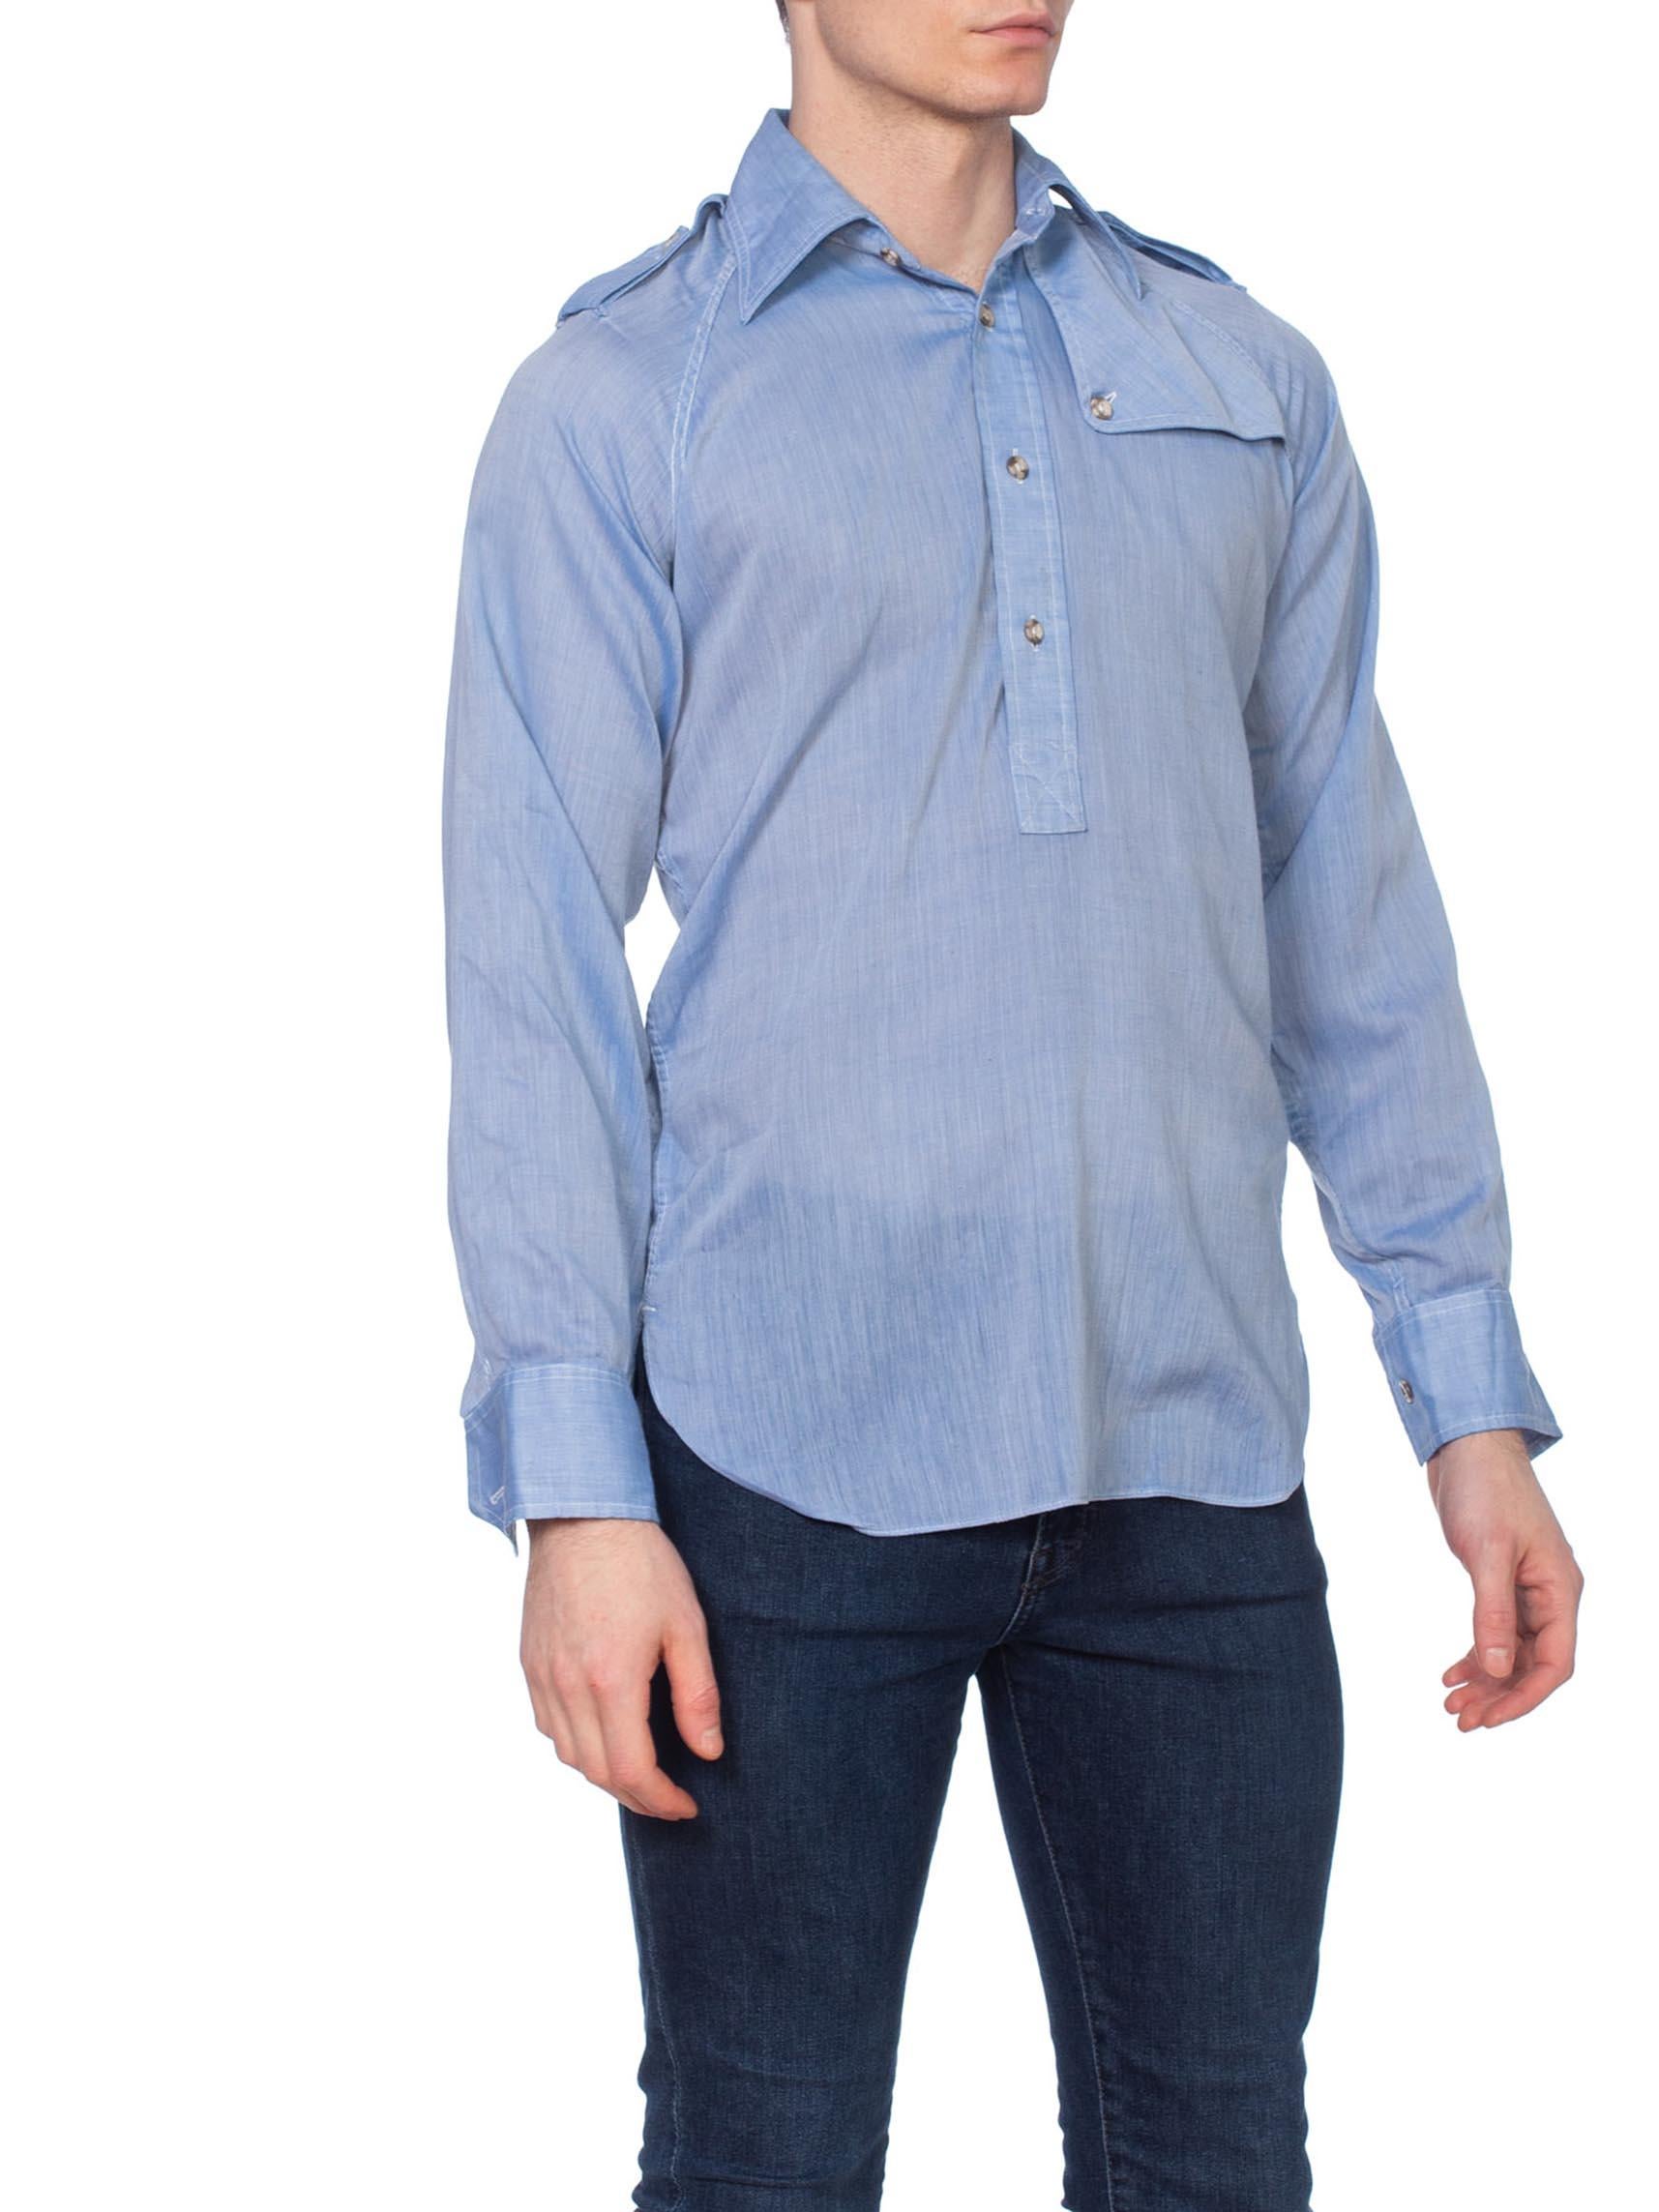 men's shirt with epaulettes